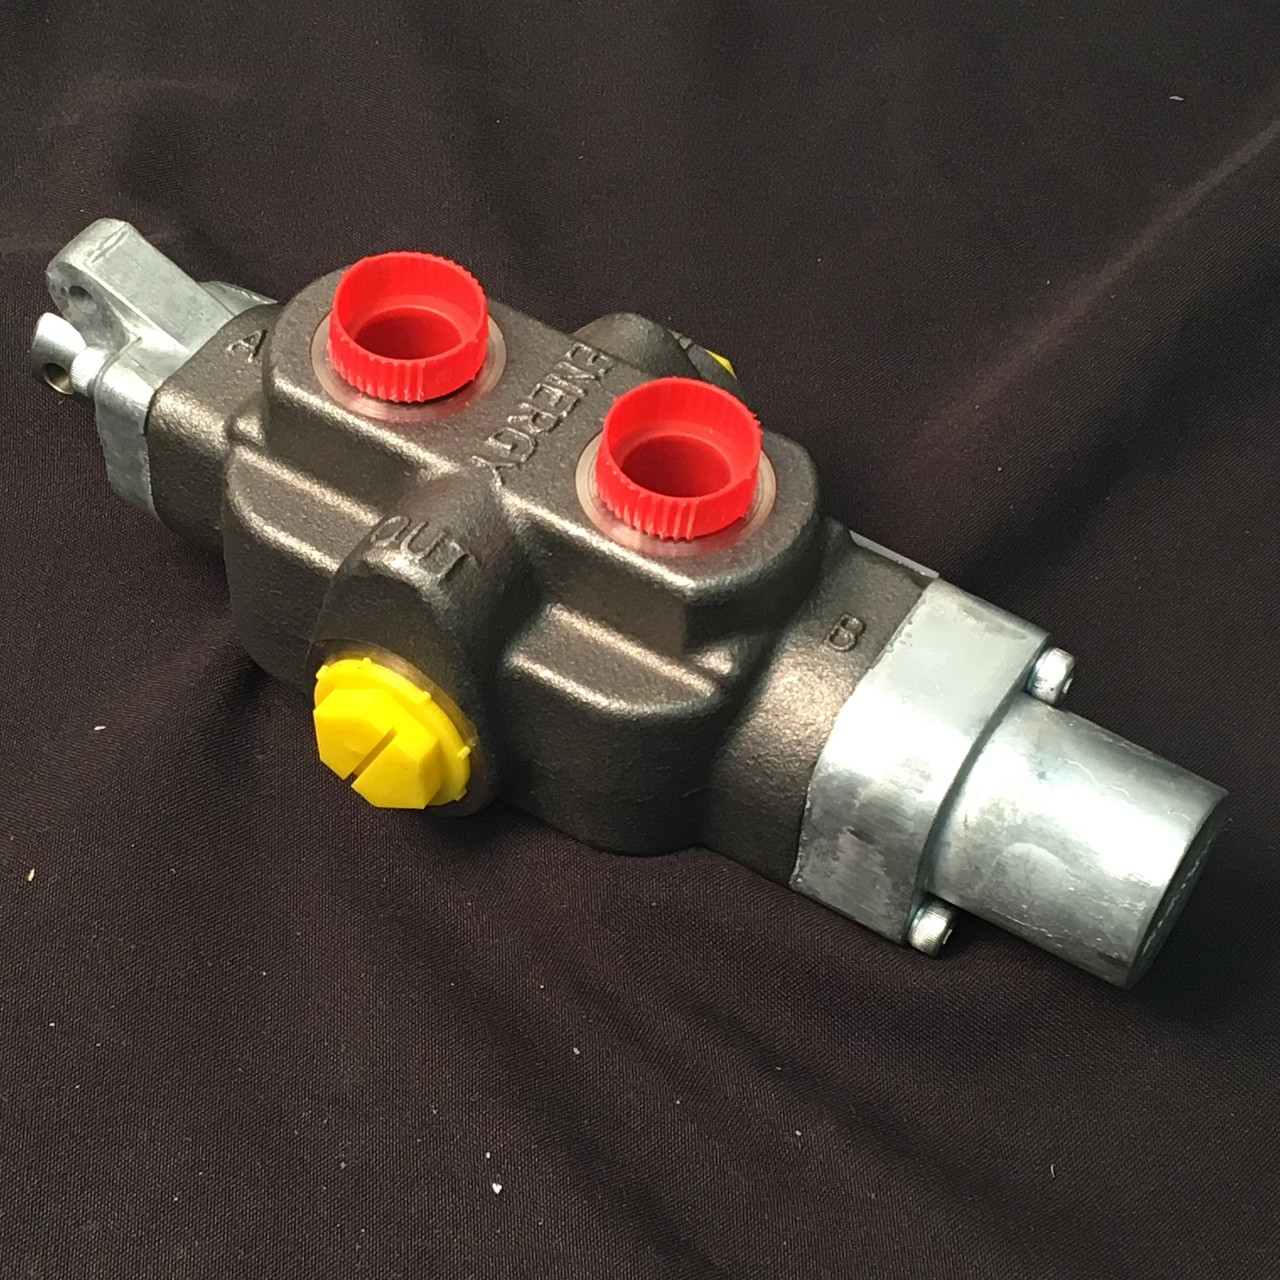 900-3920-05A: Bandit Feedwheel valve HD w/oring ports No Relief